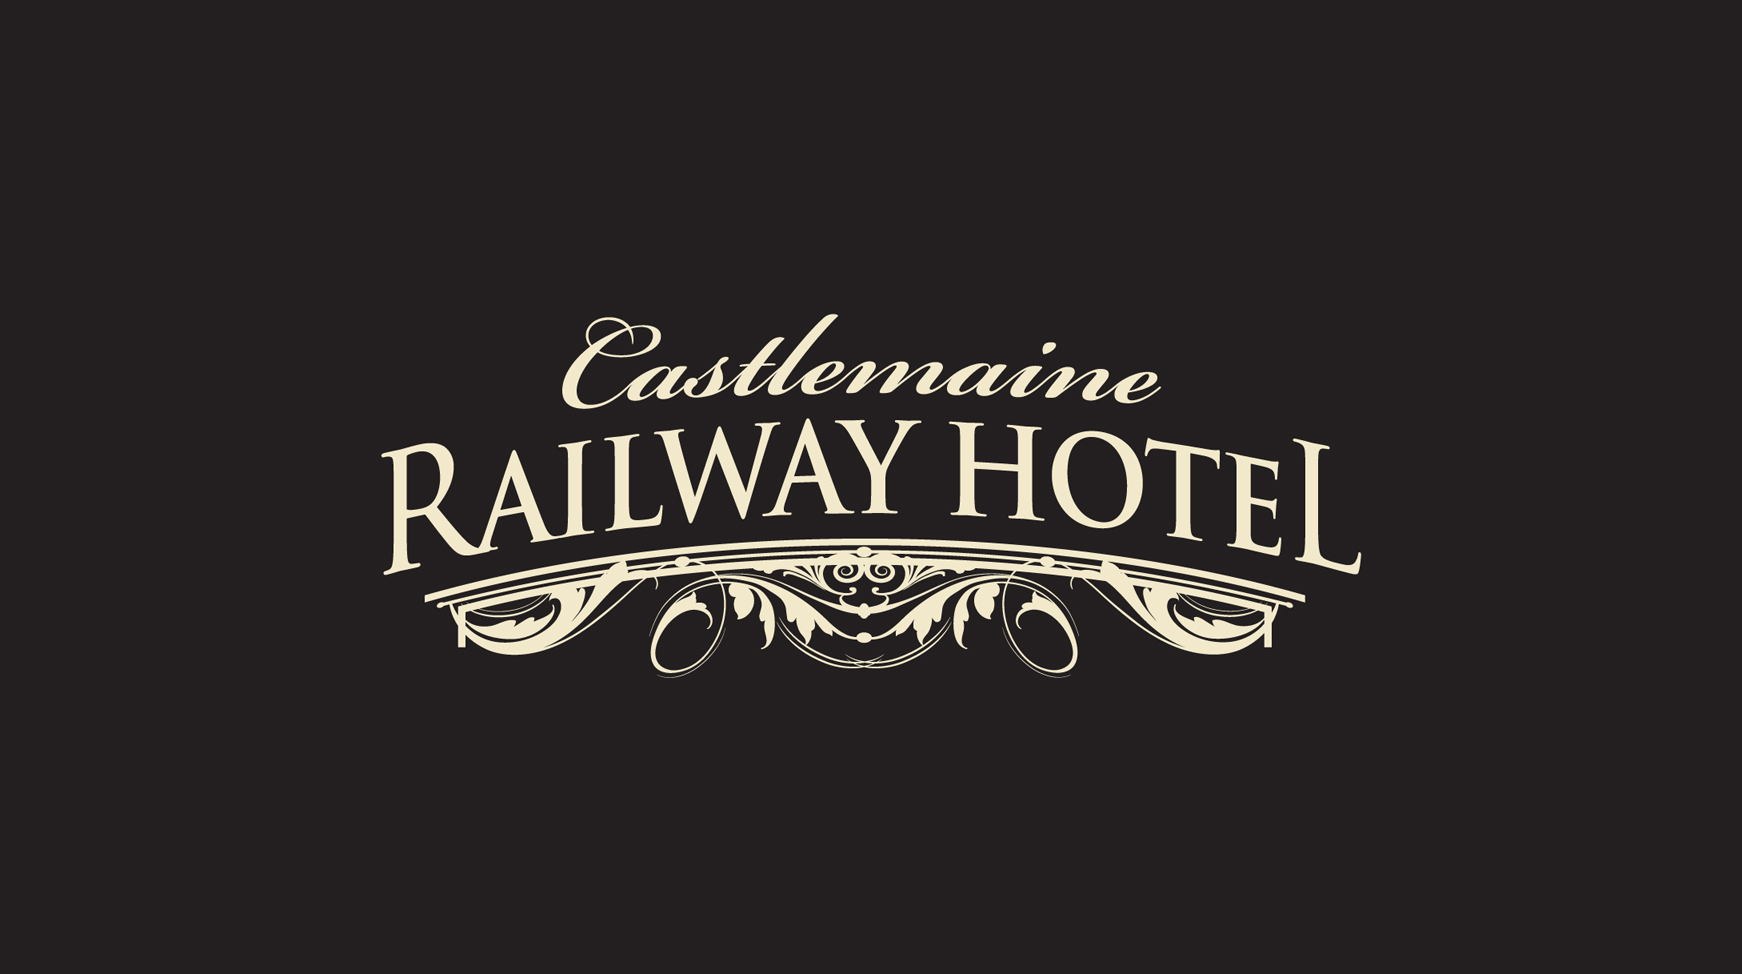 Railway Hotel Castlemaine - Great Ocean Road Tourism